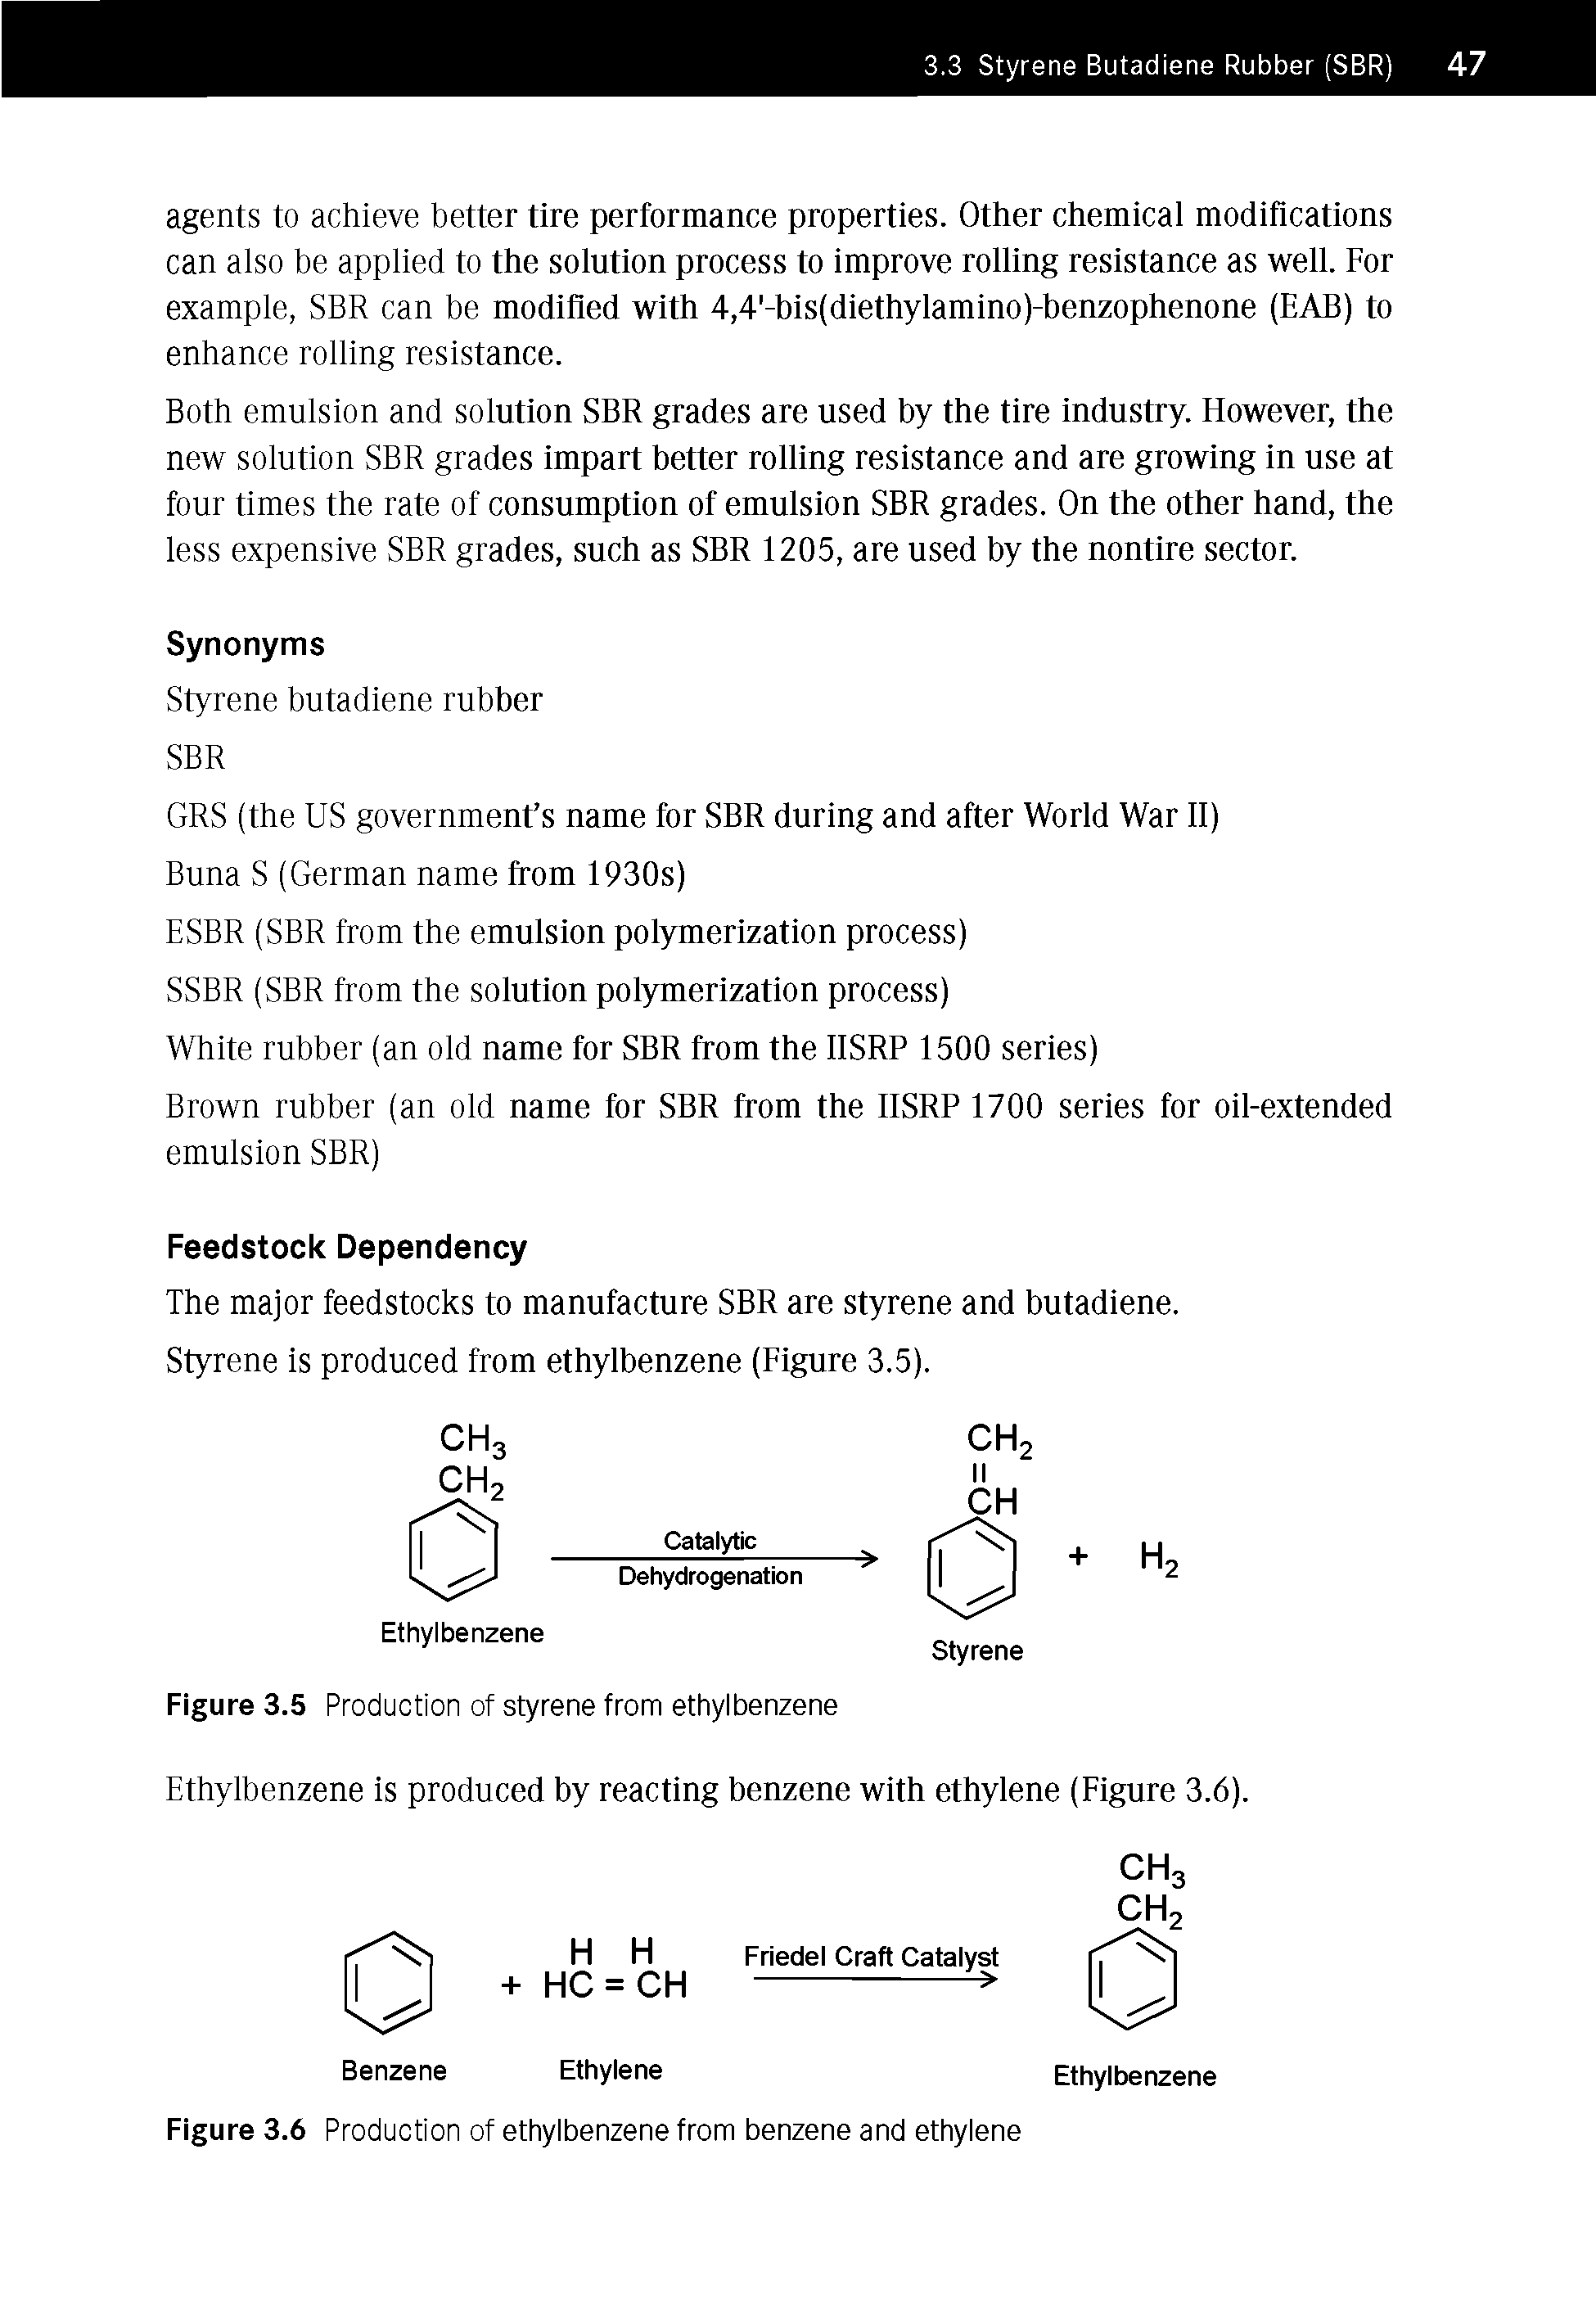 Figure 3.6 Production of ethylbenzene from benzene and ethylene...